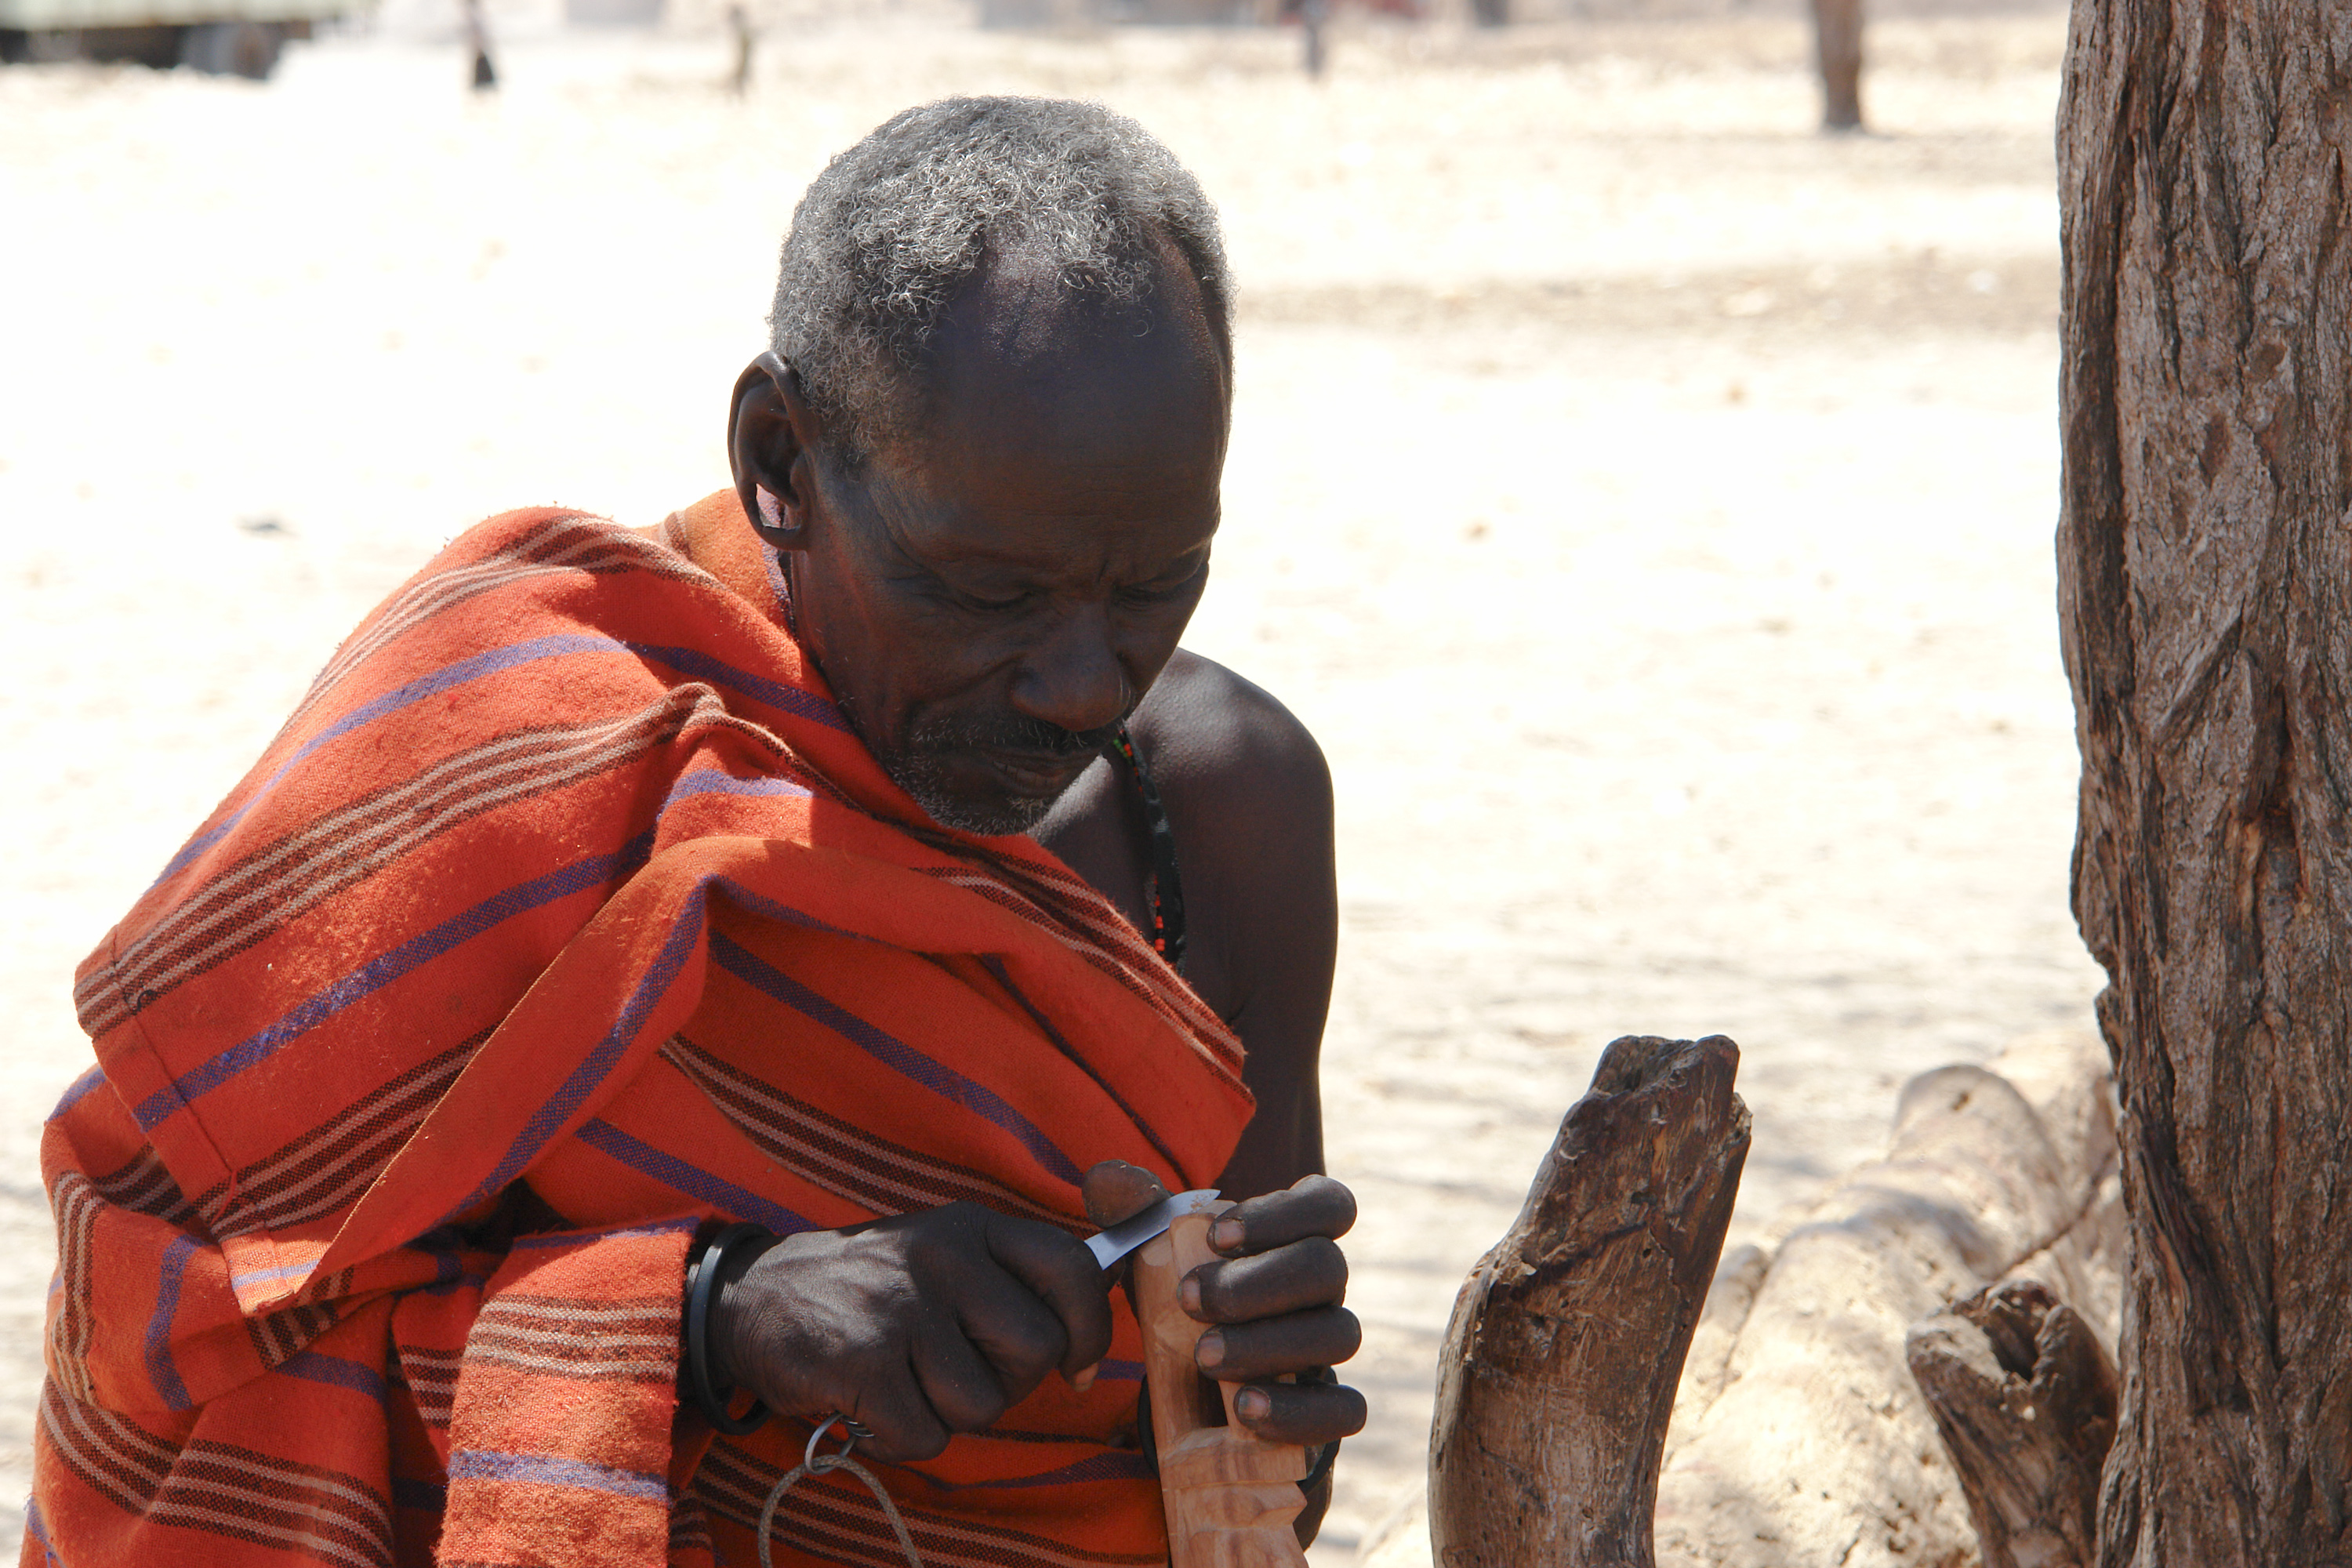 File:Samburu man carving wood.jpg - Wikimedia Commons